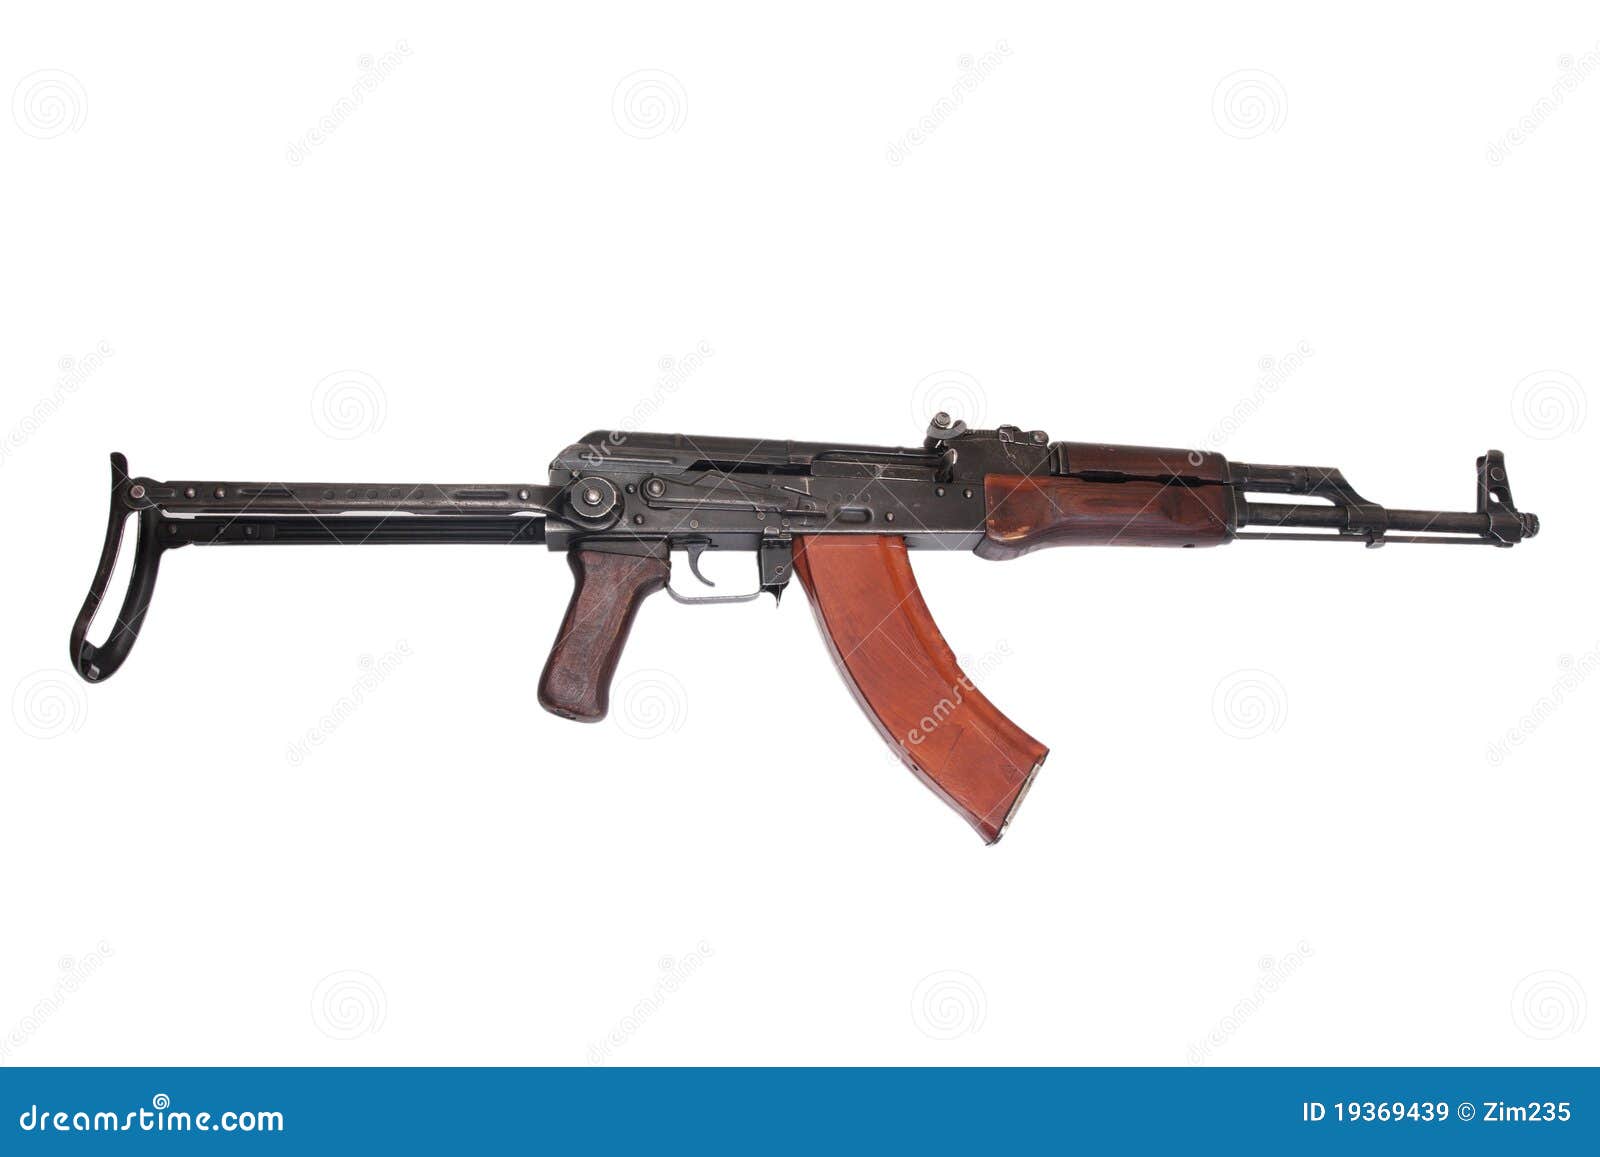 akms airborn version of kalashnikov assault rifle